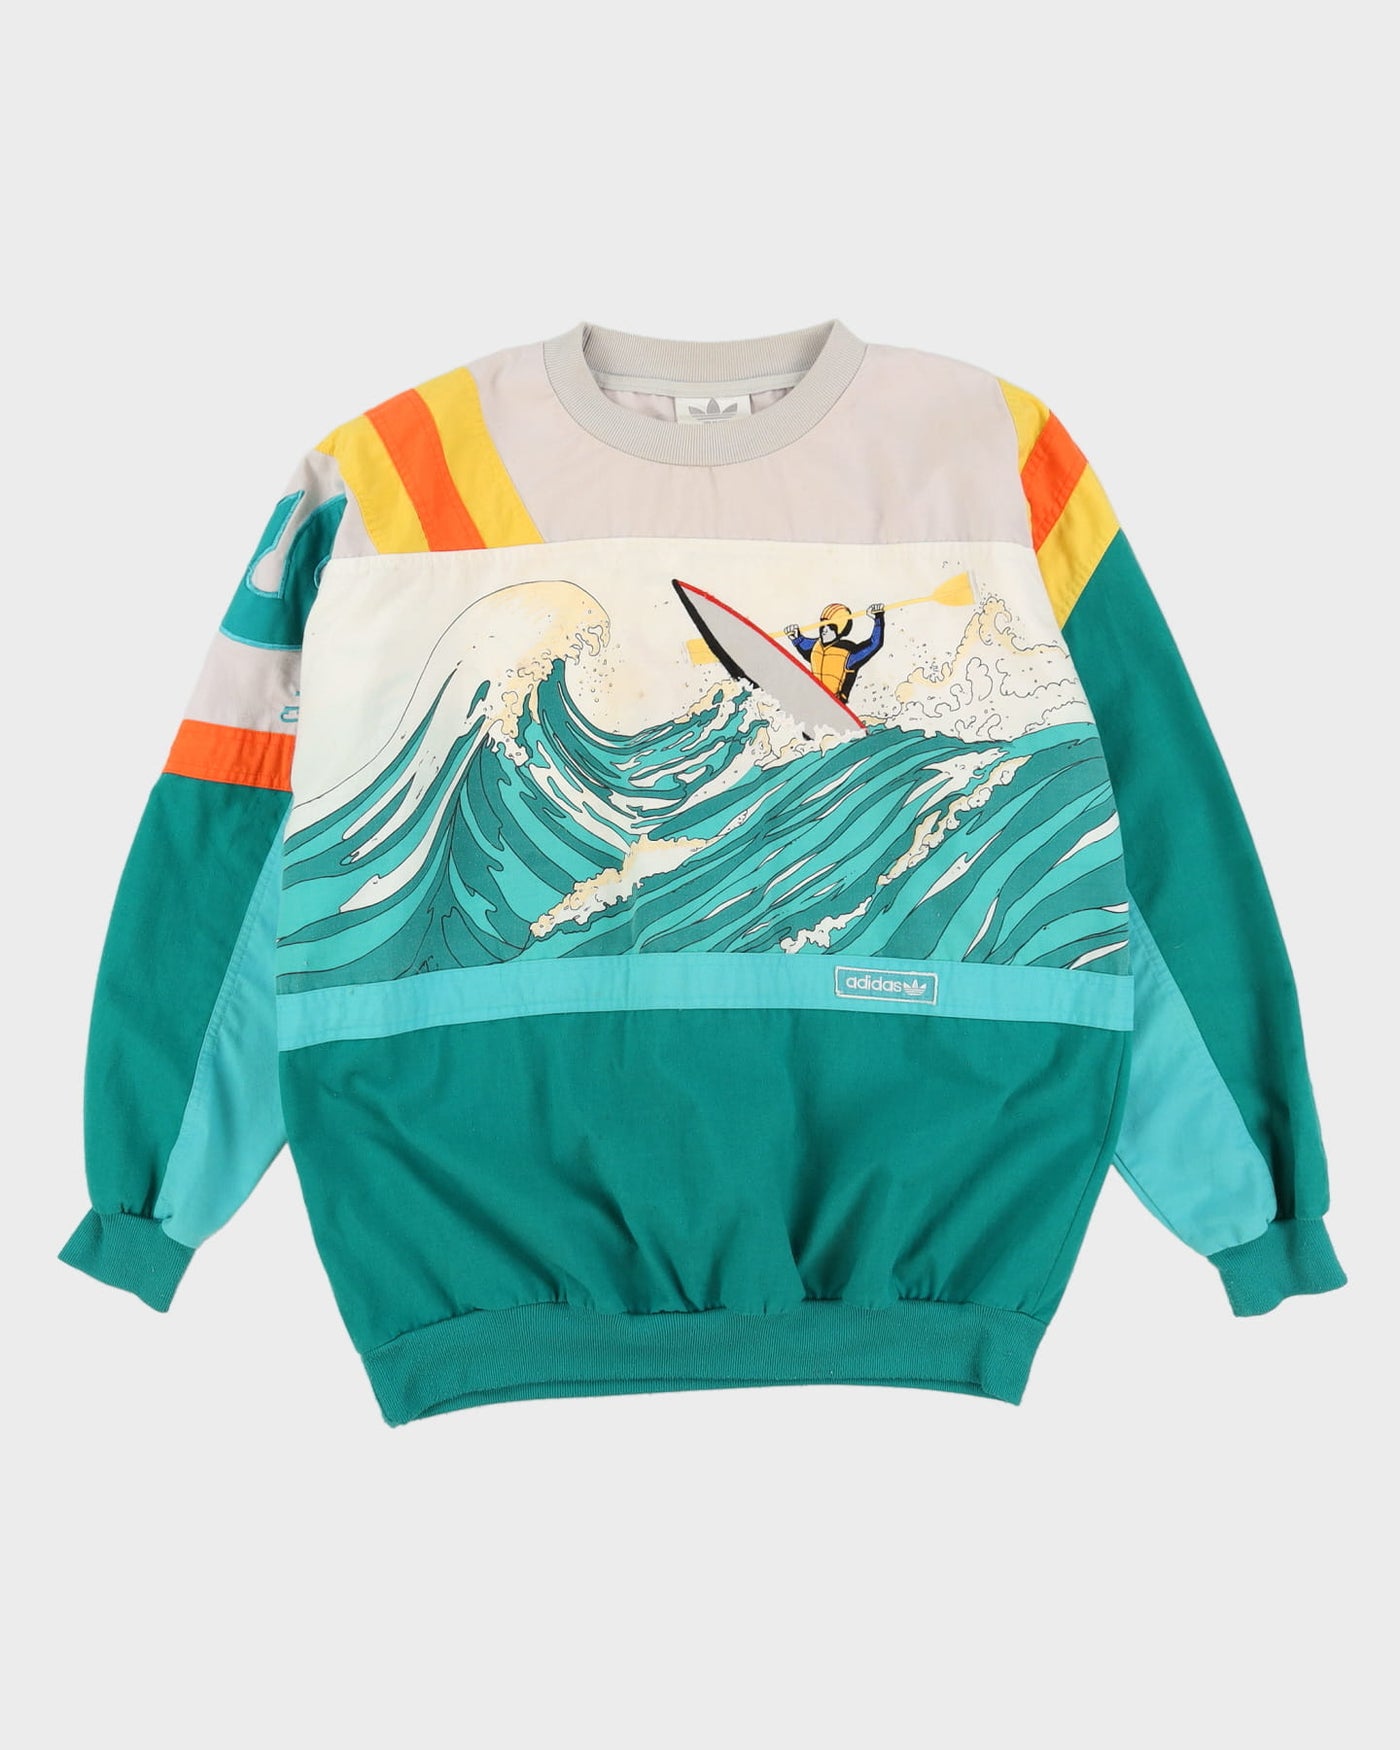 Vintage 90s Adidas All Over Print Devil's Toenail Amuza River Graphic Sweatshirt - L